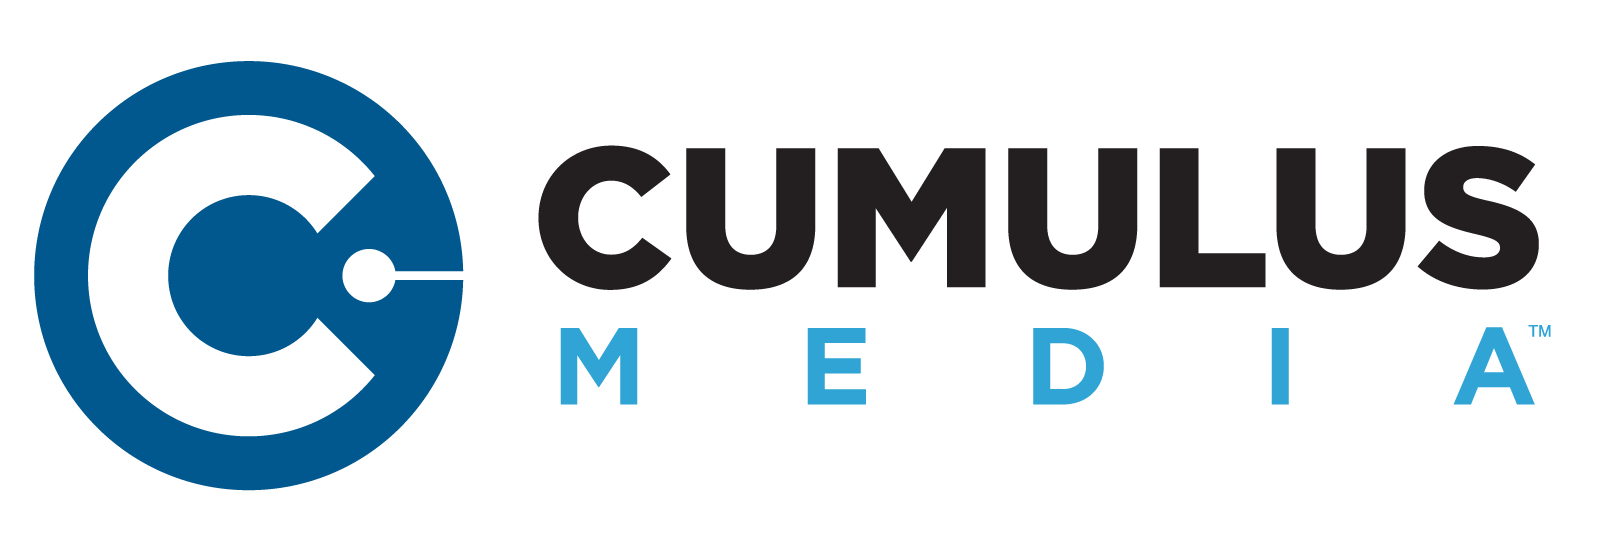 Cumulus Media - Muskegon and Grand Rapids